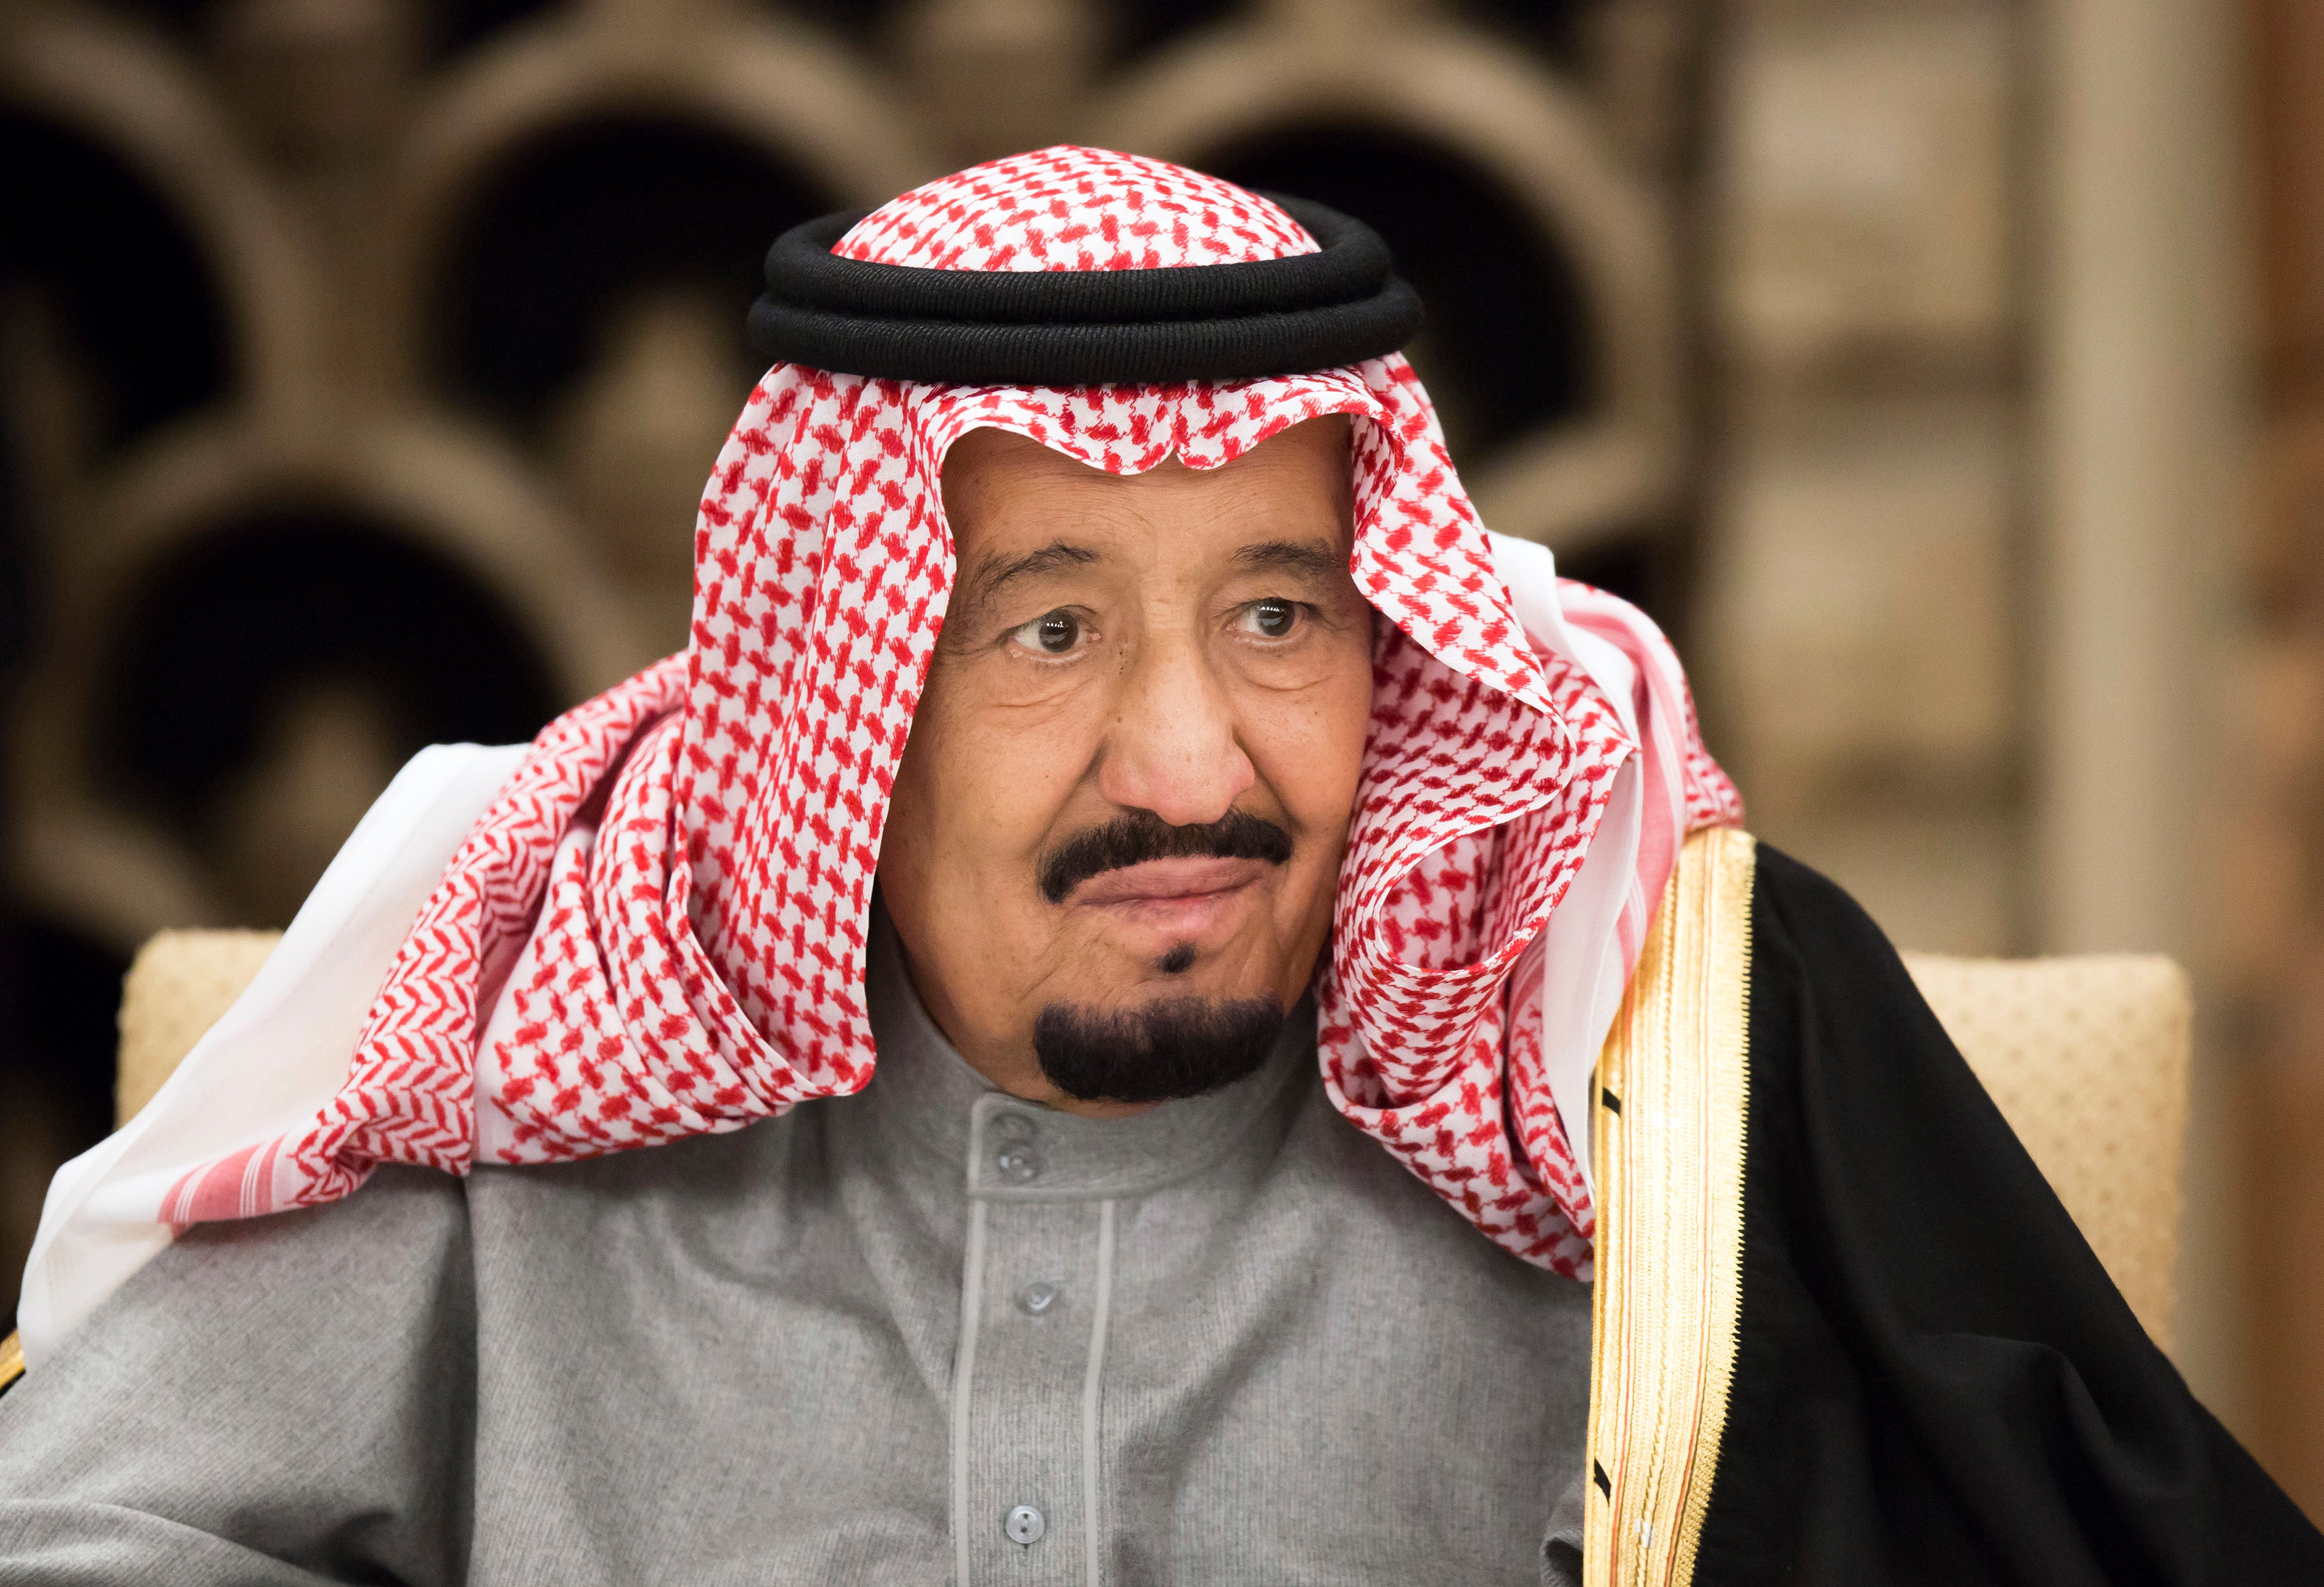 Турки аль сауд. Король Саудовской Аравии Салман. Абдель Азиз Бен Сальман Аль Сауд. Король Саудовской Аравии Салман ибн Абдул-Азиз Аль Сауд. Абдулазиз Бин Салман.